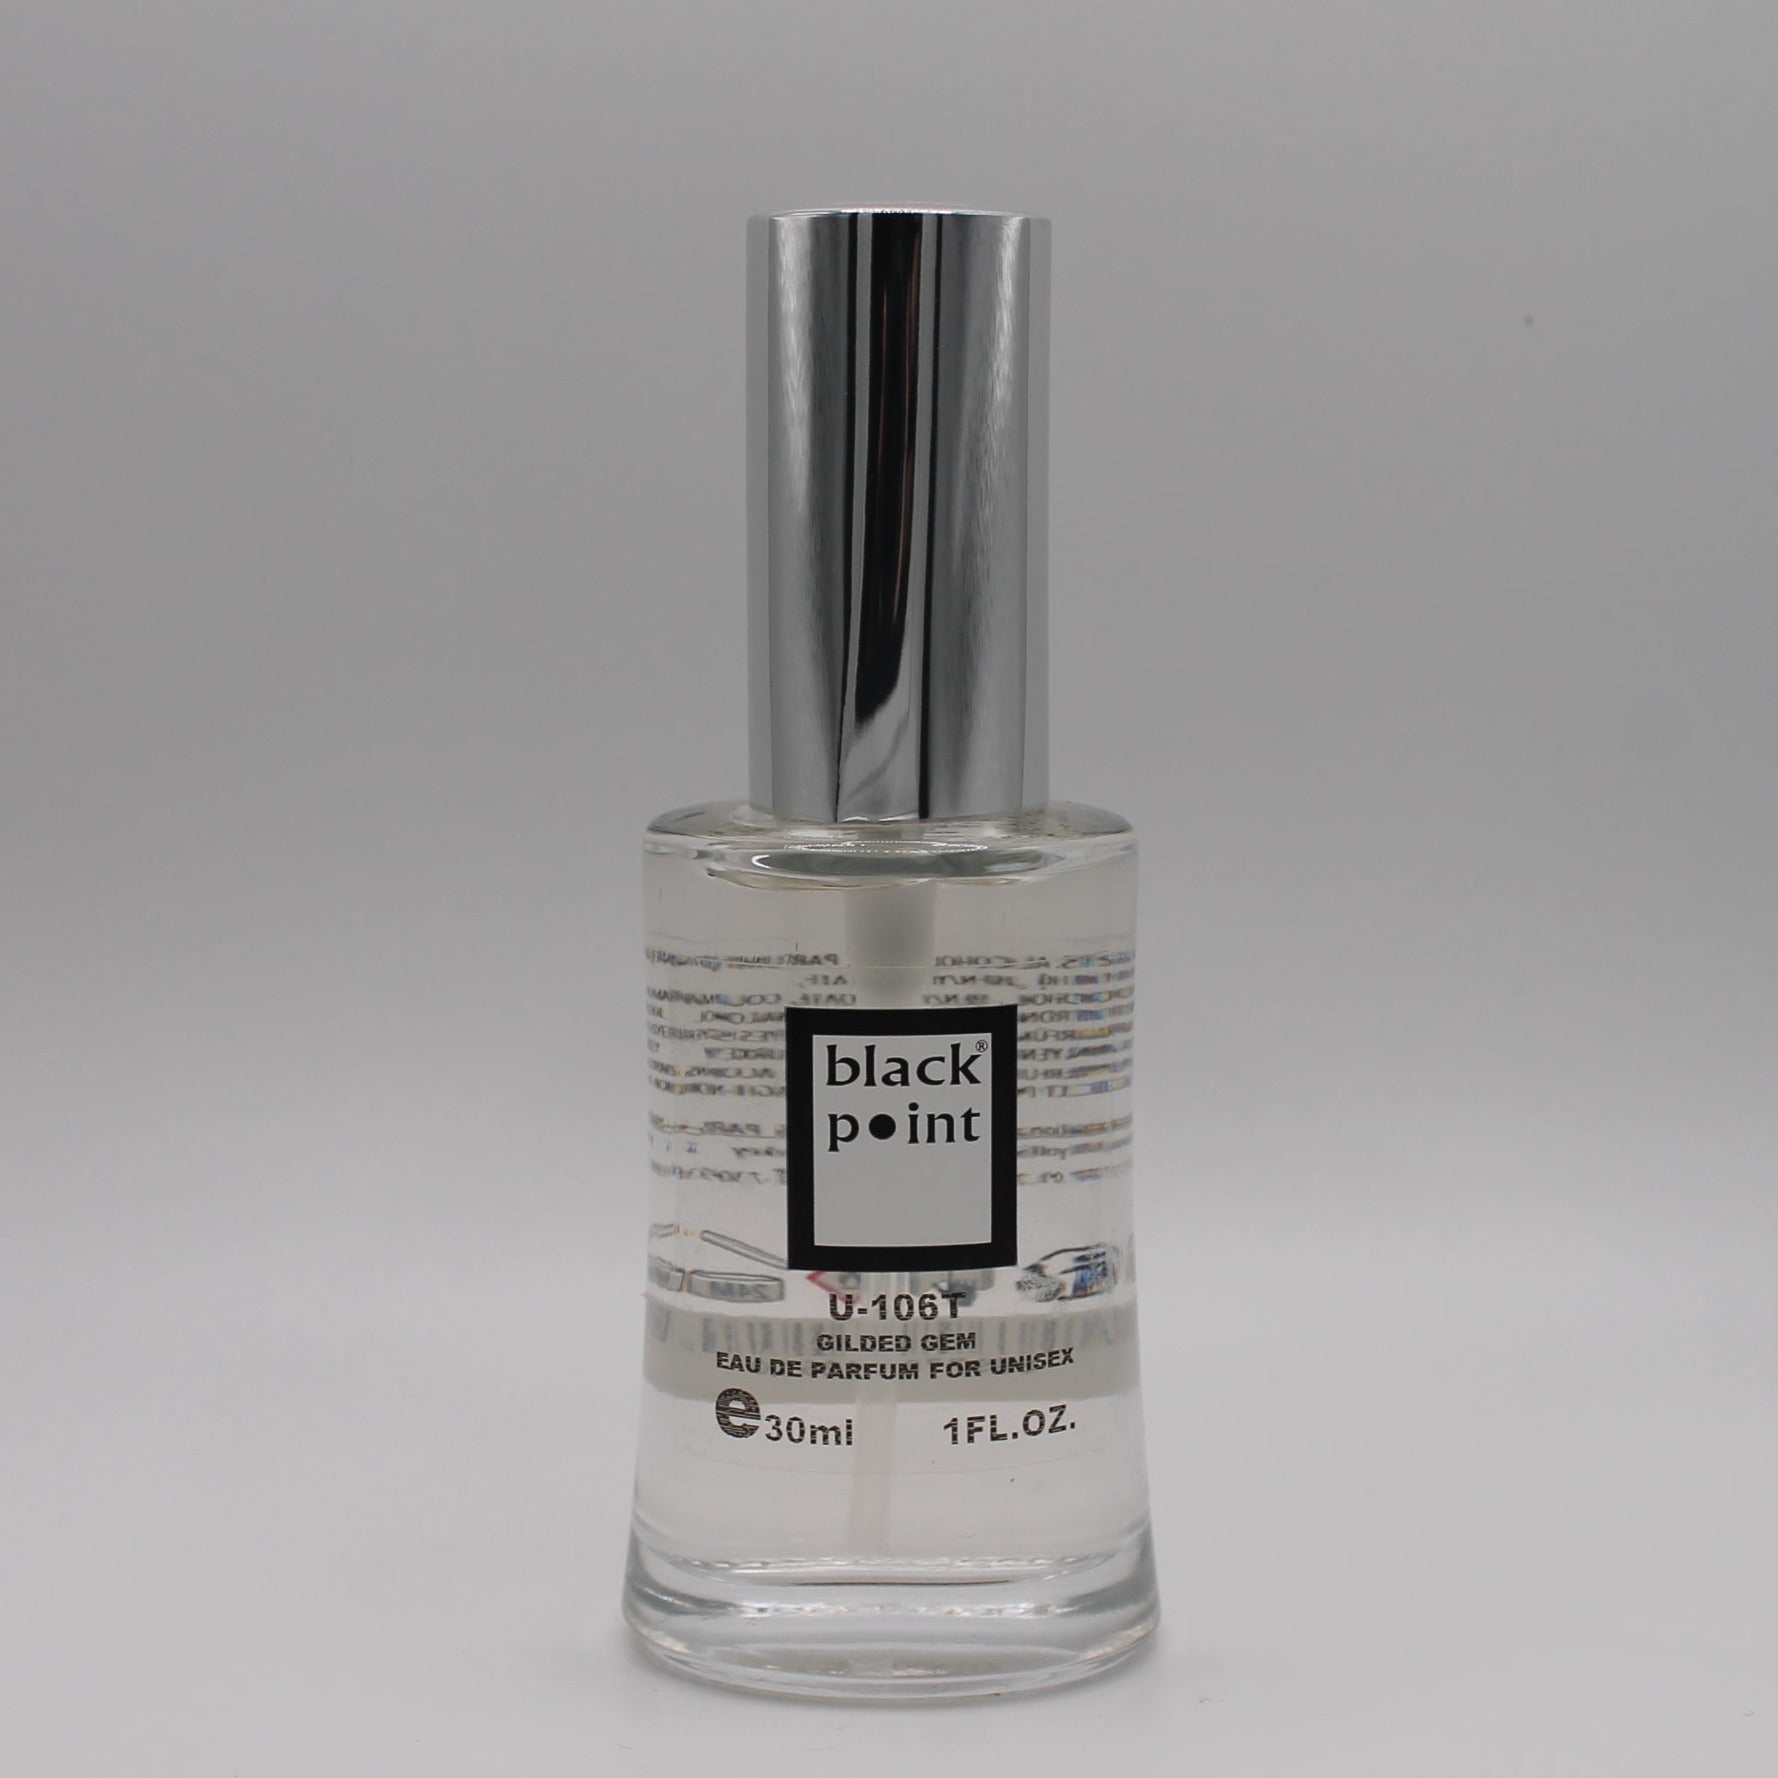 U-106T Unisex Black Point Perfumes 30ml